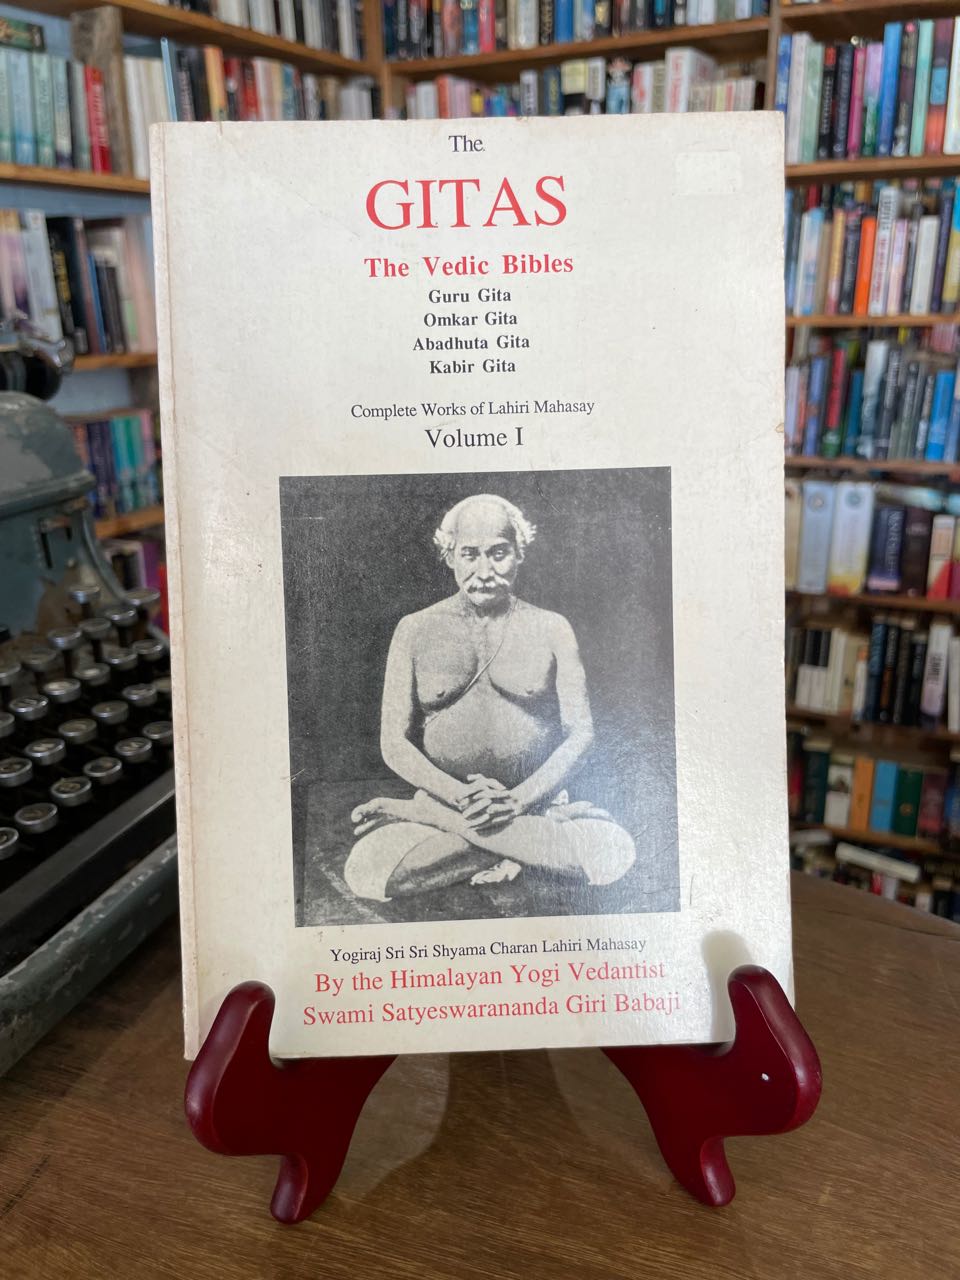 The Gitas by Swamu Satyeswarananda Giri Babaji - The Nook Yamba